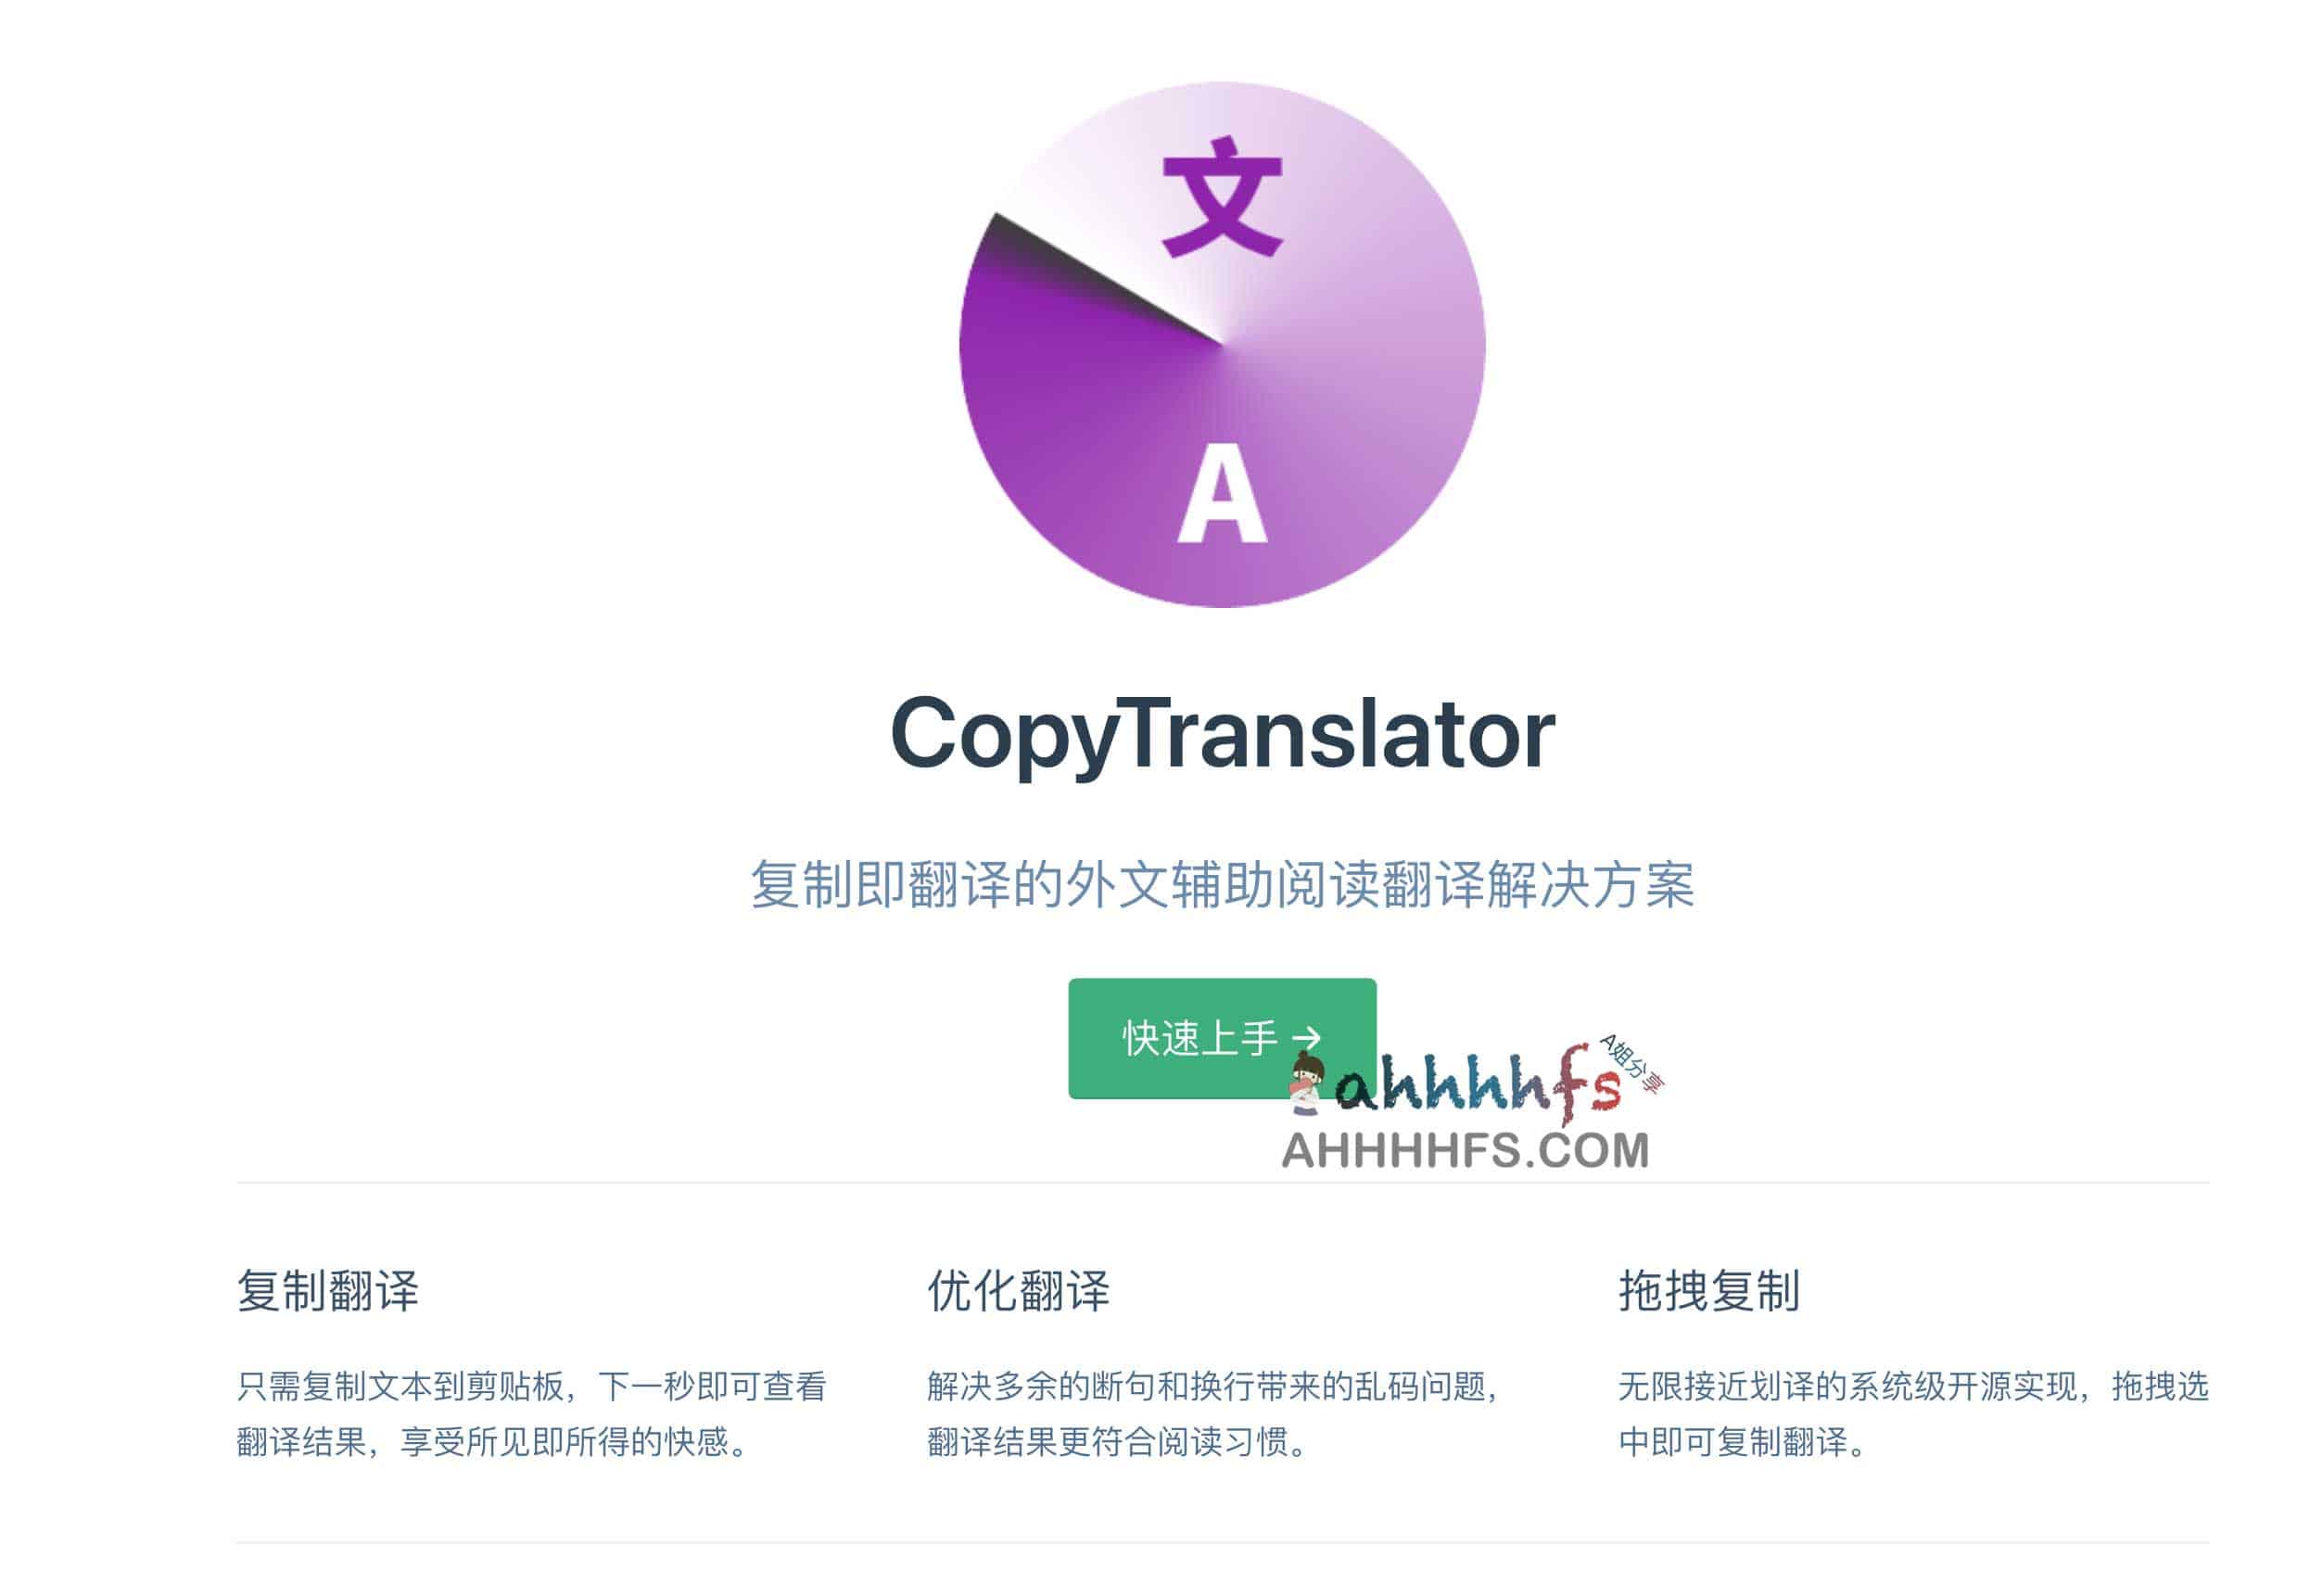 CopyTranslator-复制即翻译 文献翻译神器 支持多接口翻译